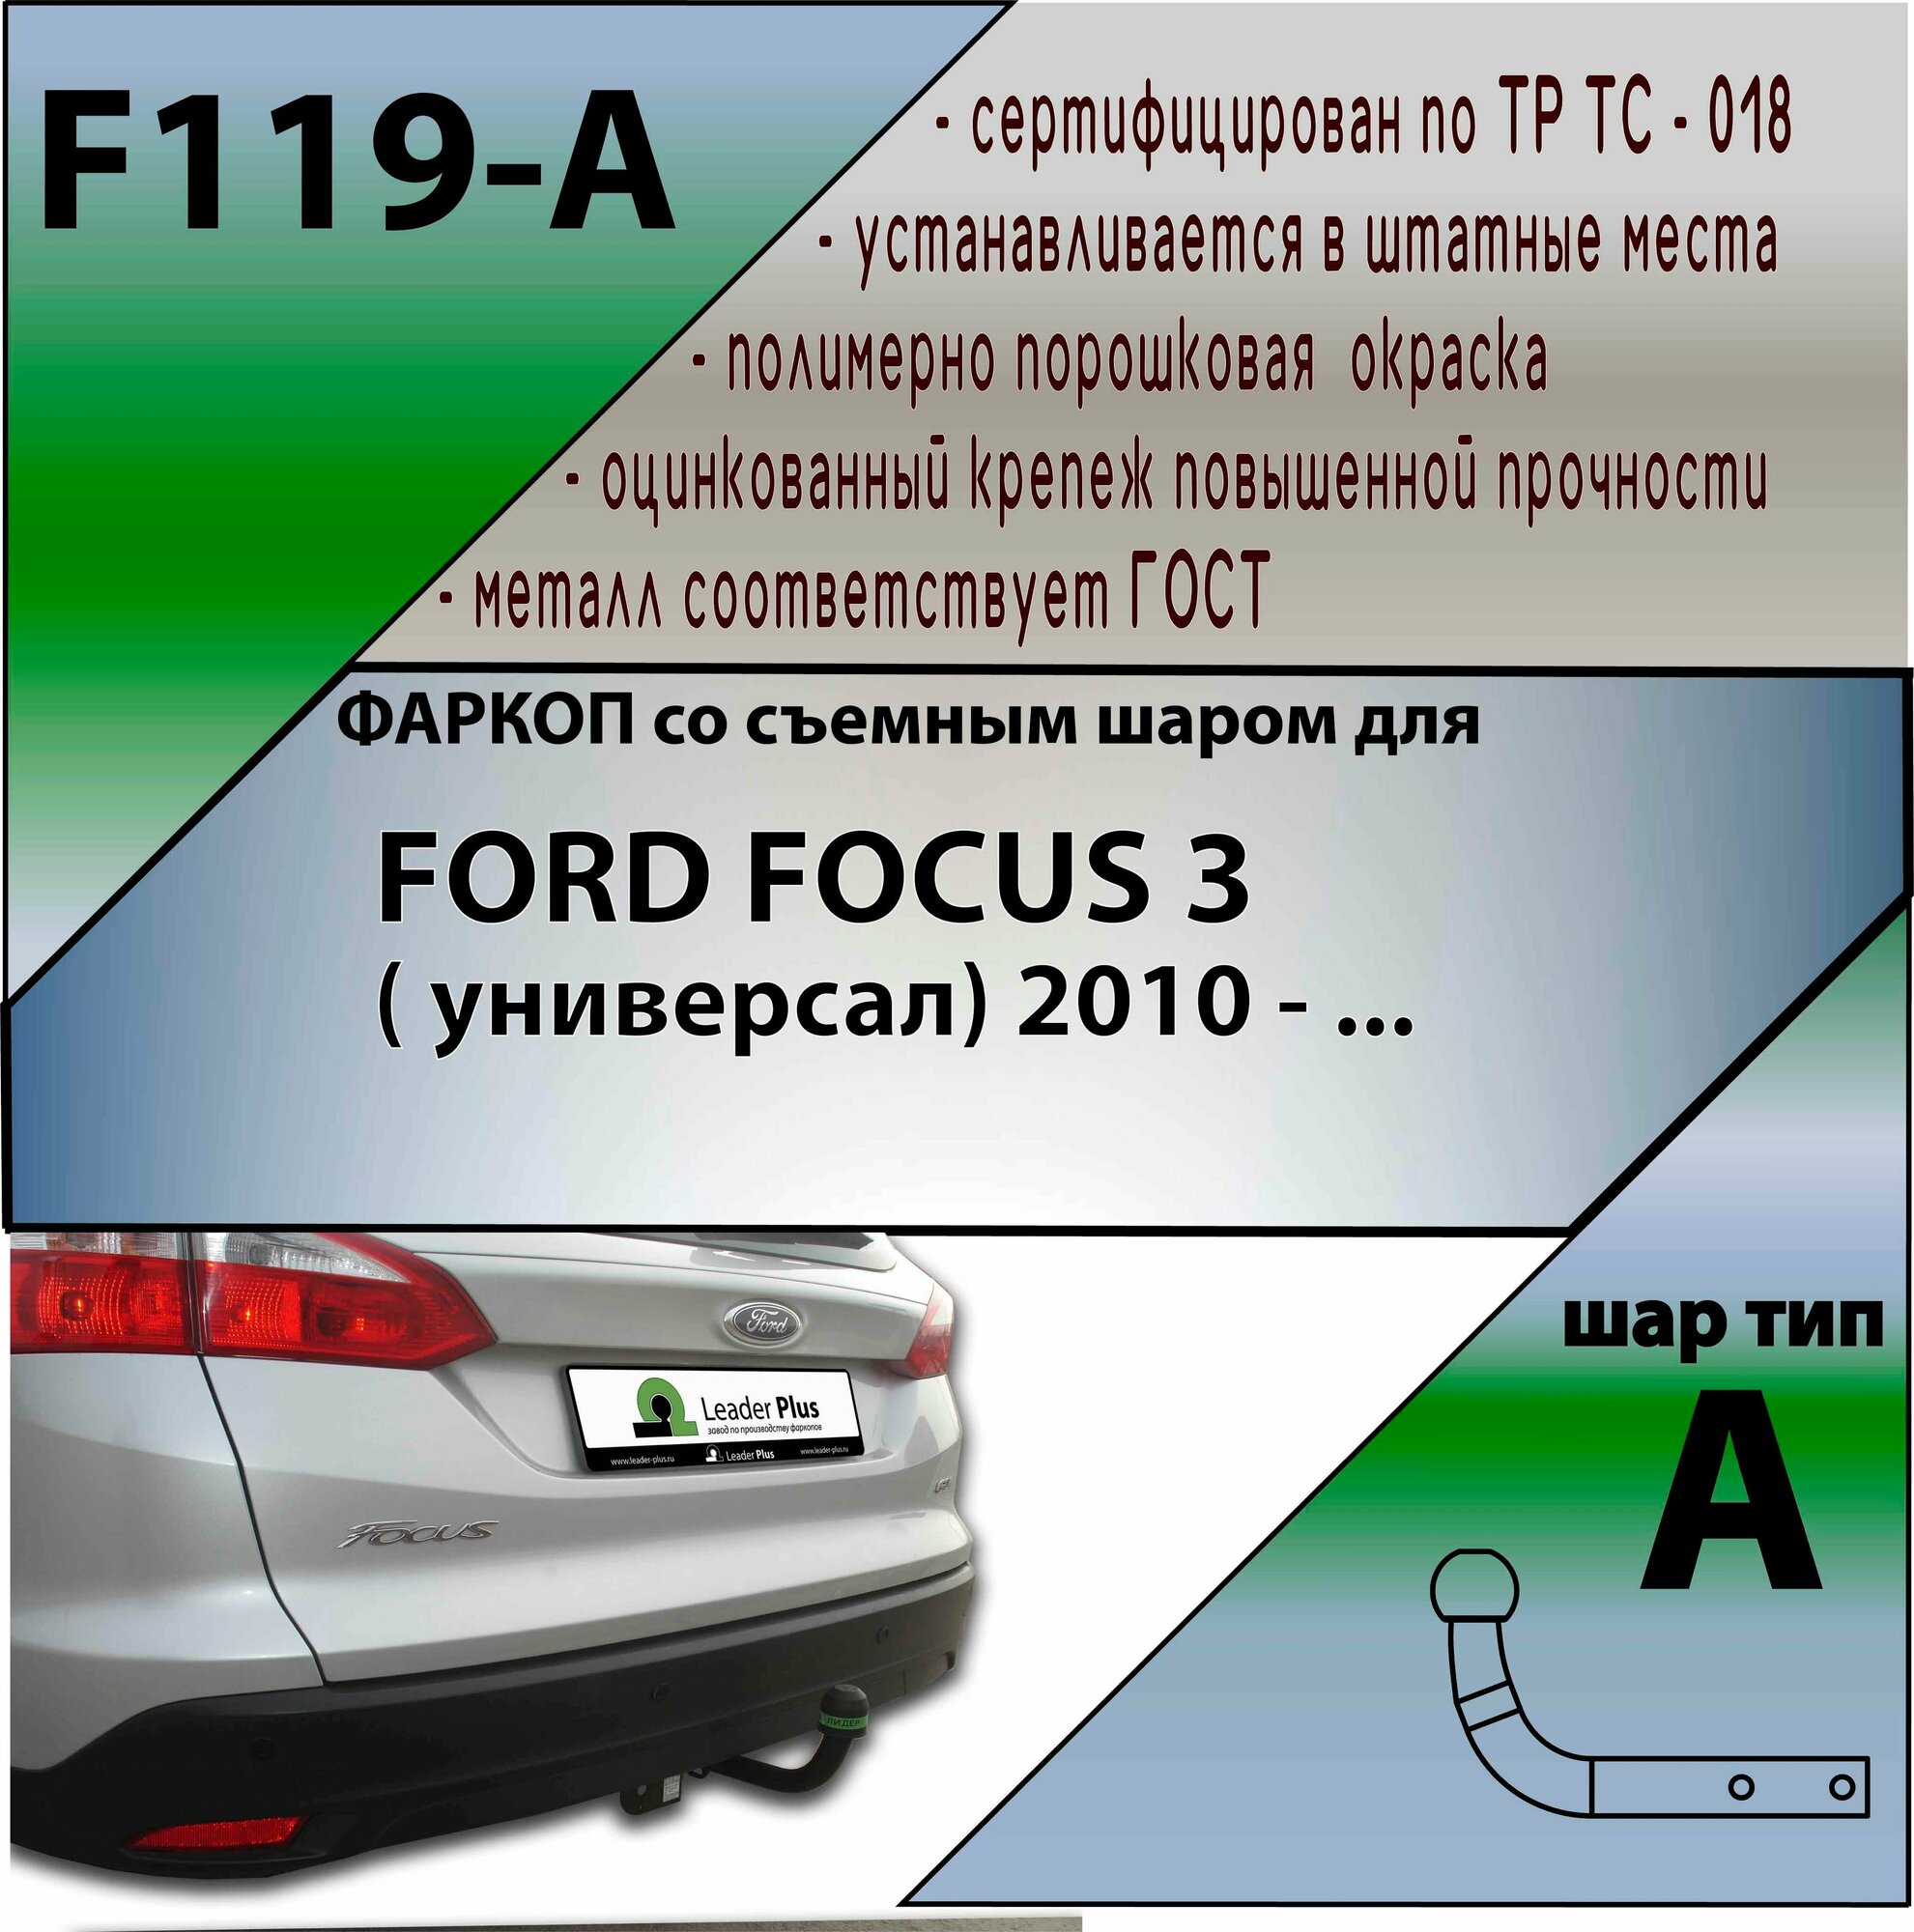 Фаркоп F119-A Лидер плюс для FORD FOCUS 3 ( универсал) 2010 - . (без электрики)